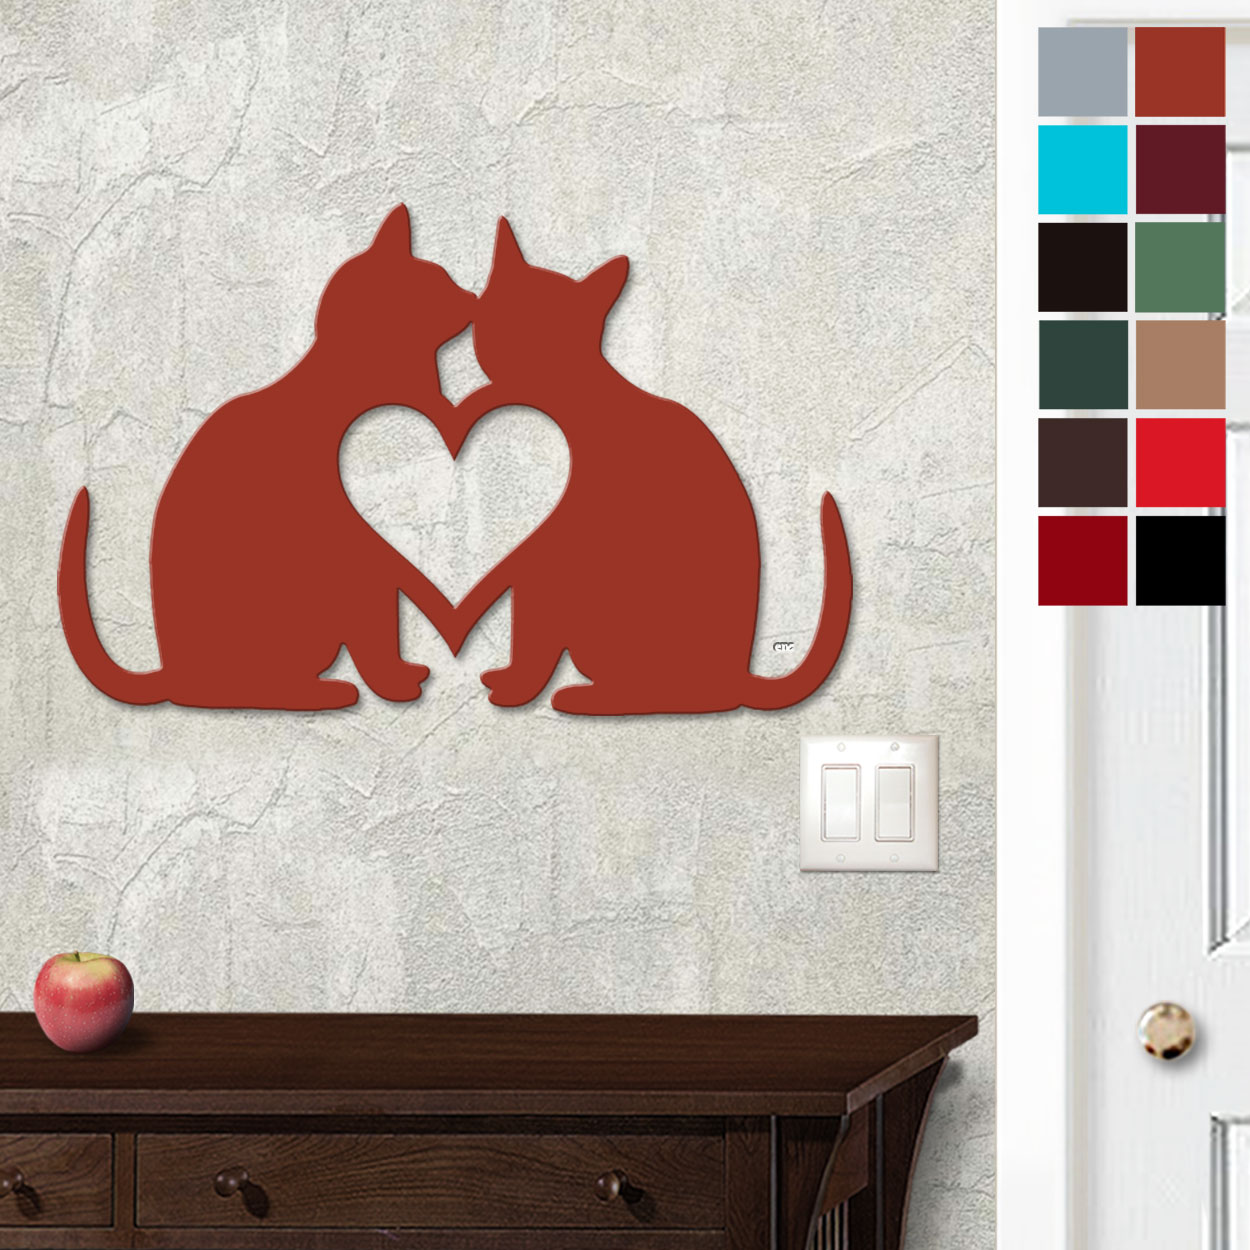 625007 - 18in or 24in Floating Metal Wall Art - Cat Lovers - Choose Color